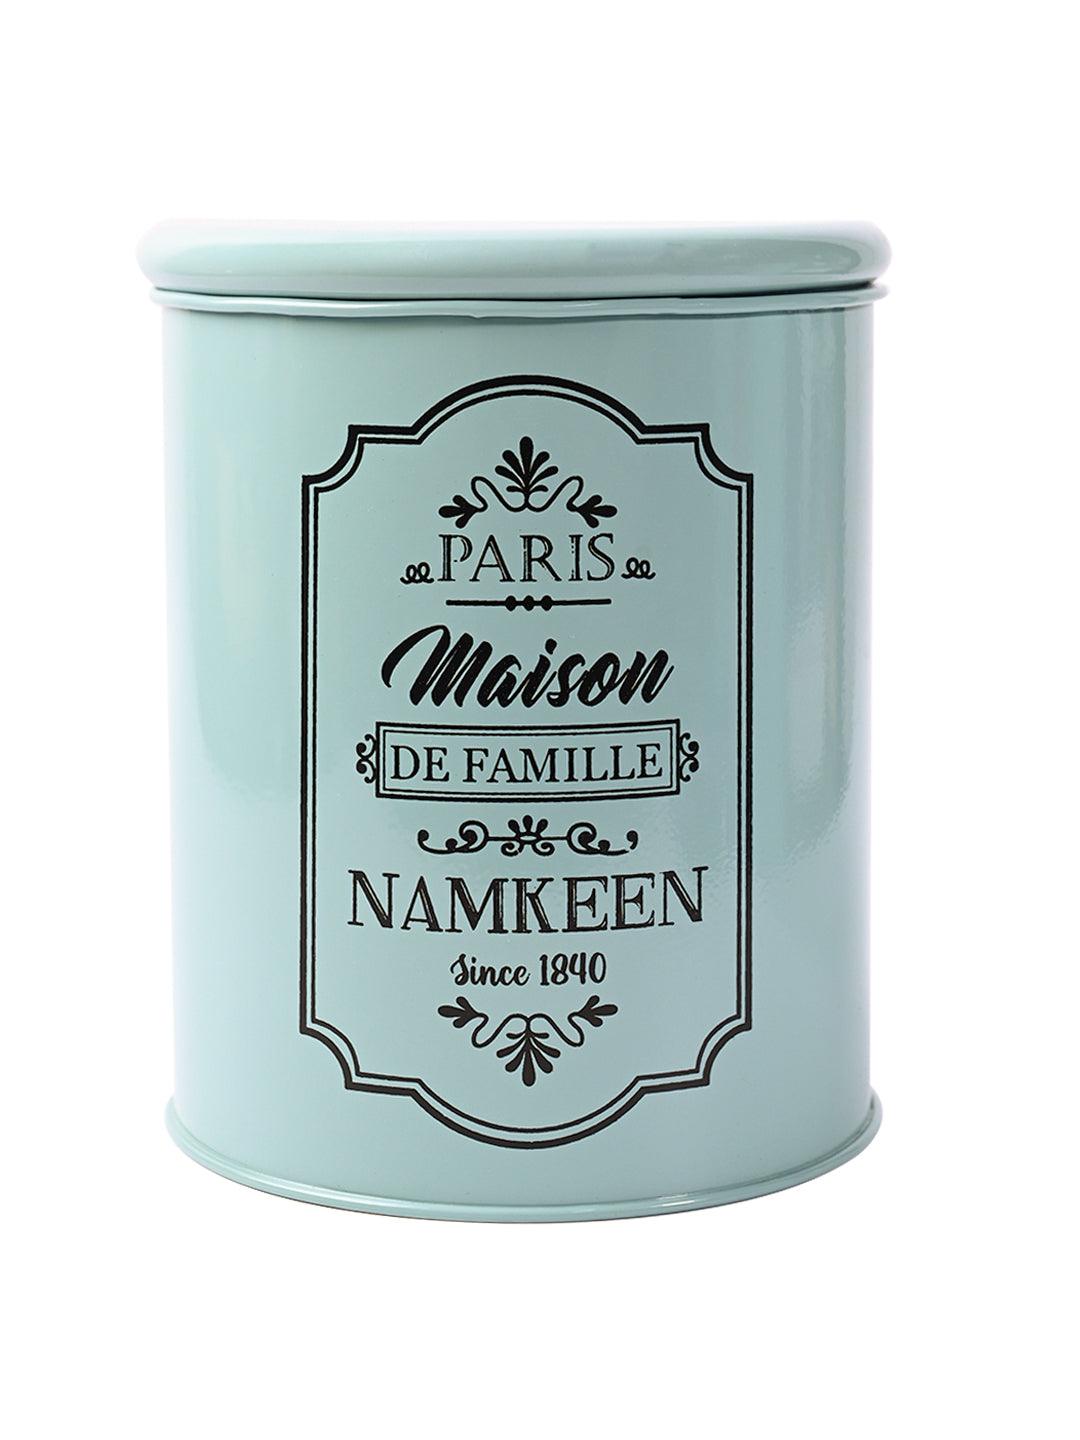 Metal Namkeen Jar - Green, 1700 Ml - MARKET99